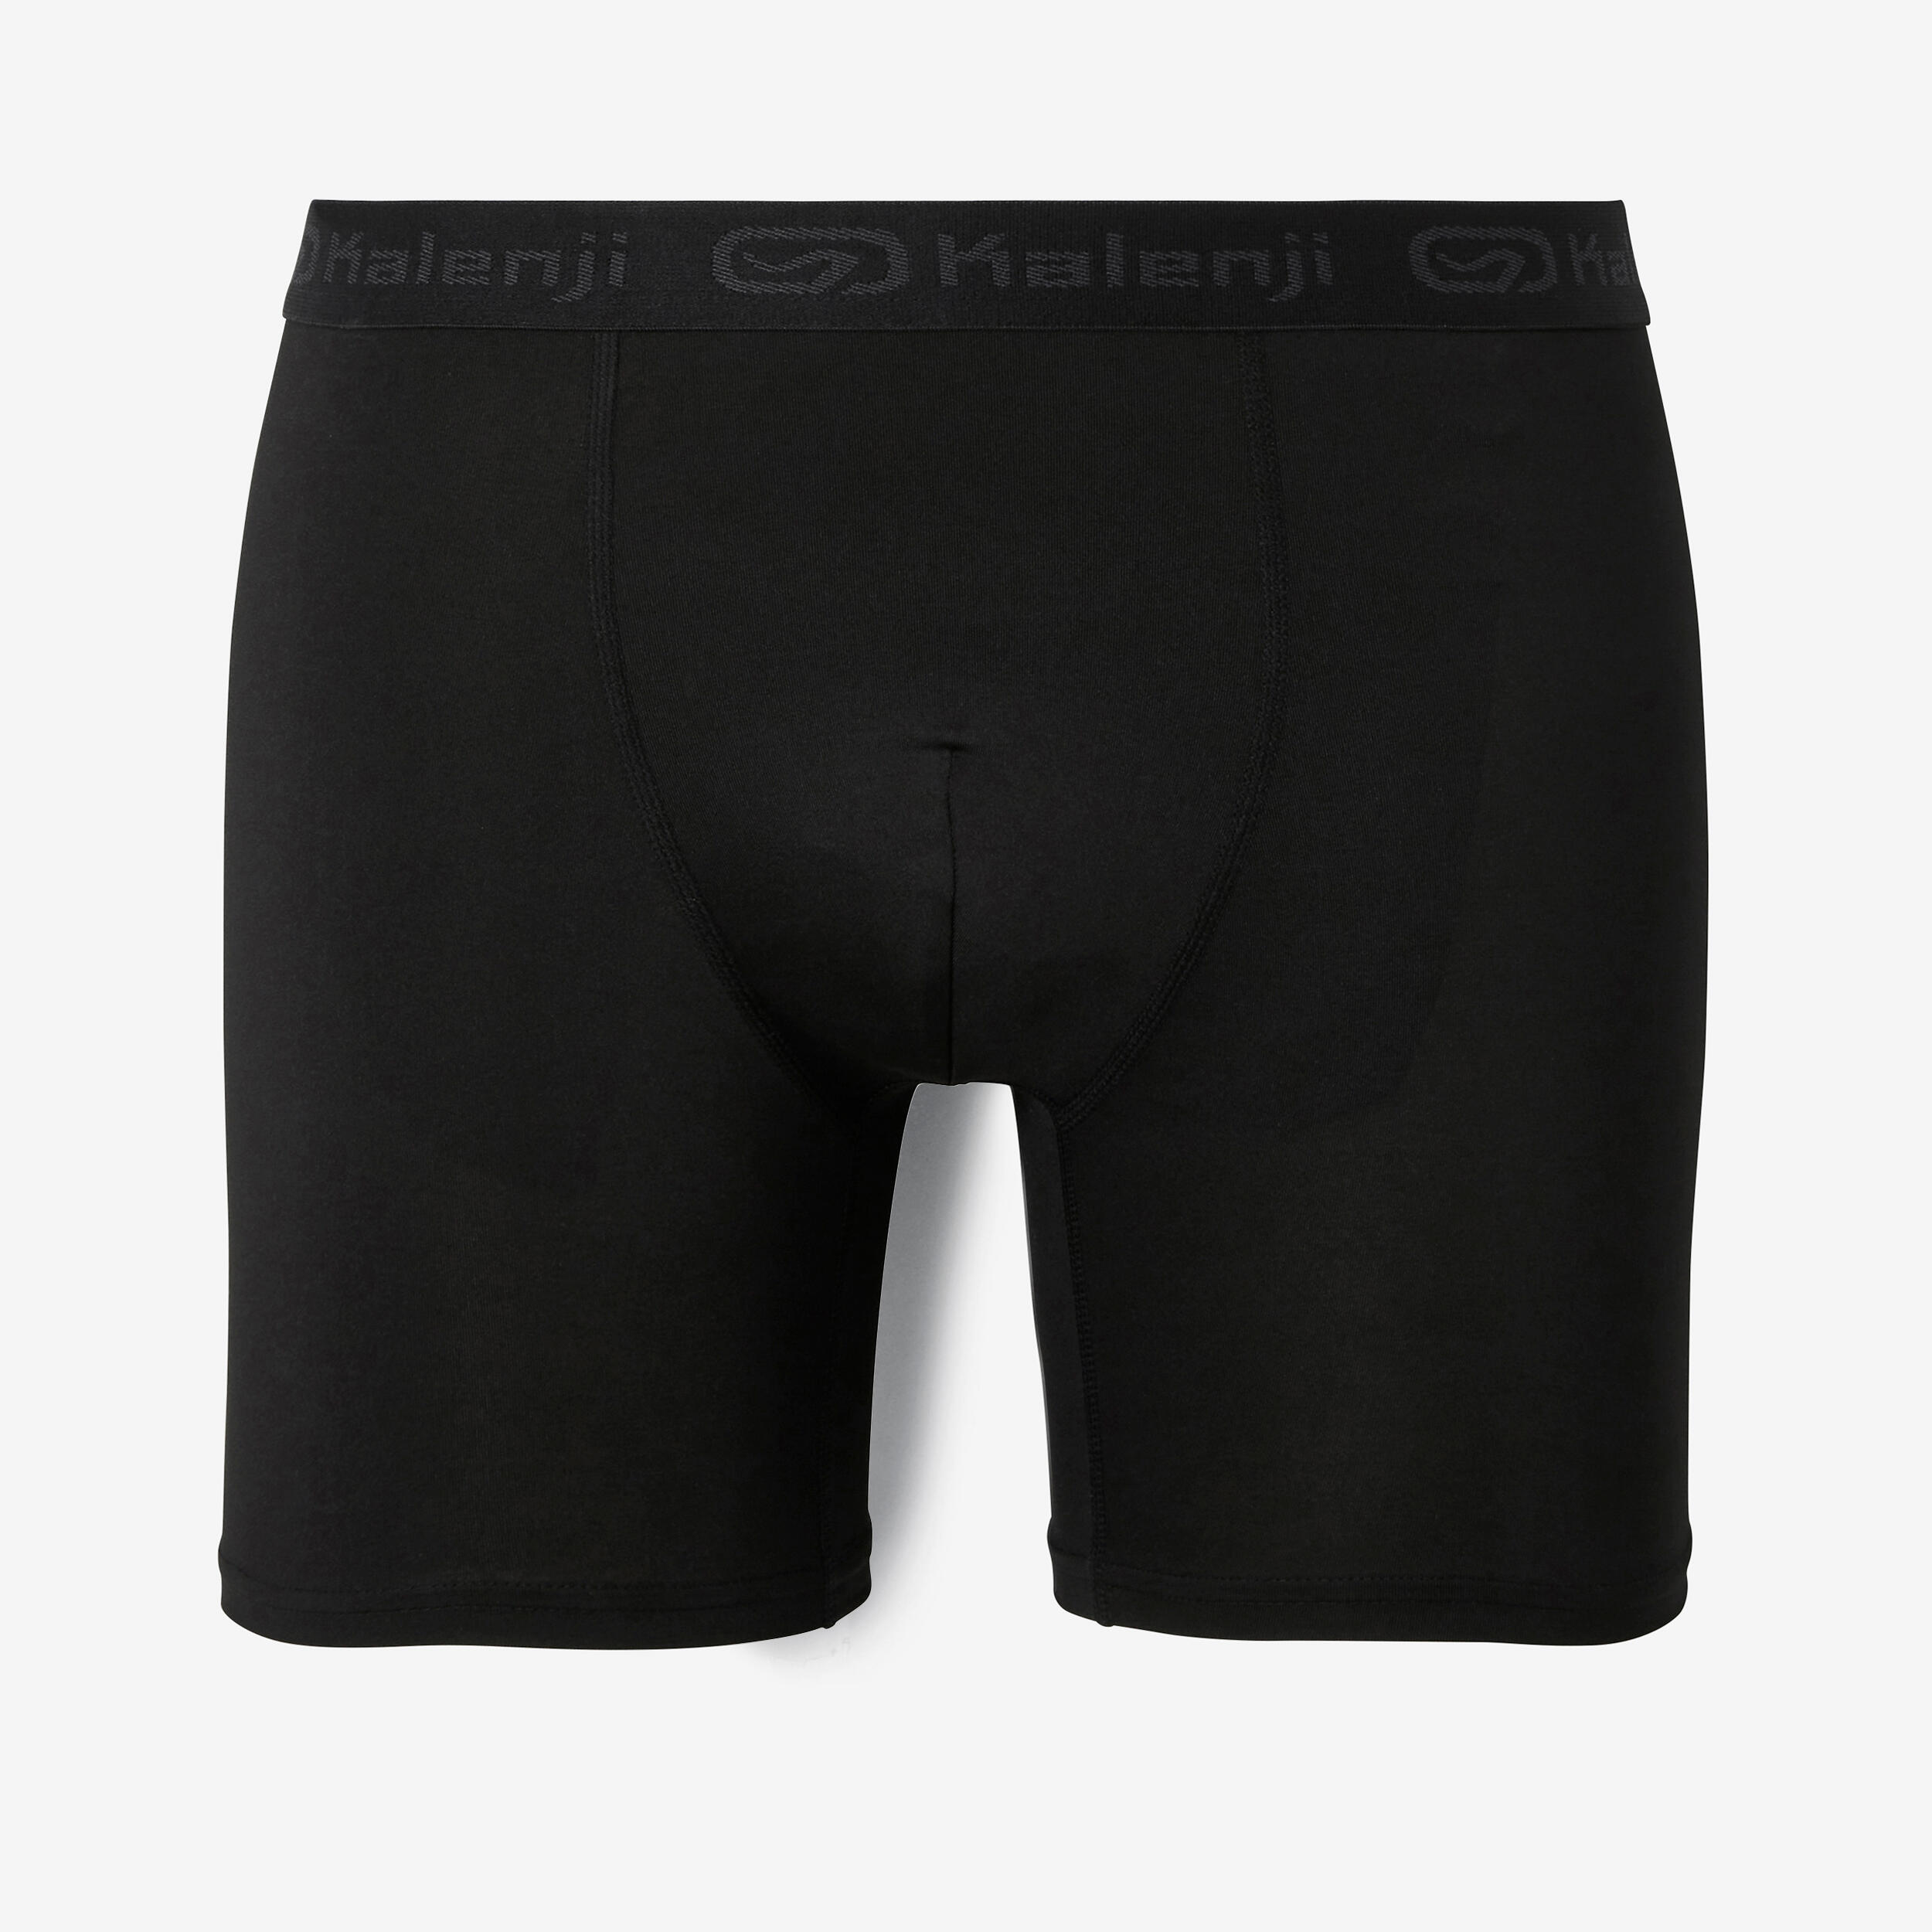 Buy Navy Shorts for Men by JOCKEY Online  Ajiocom